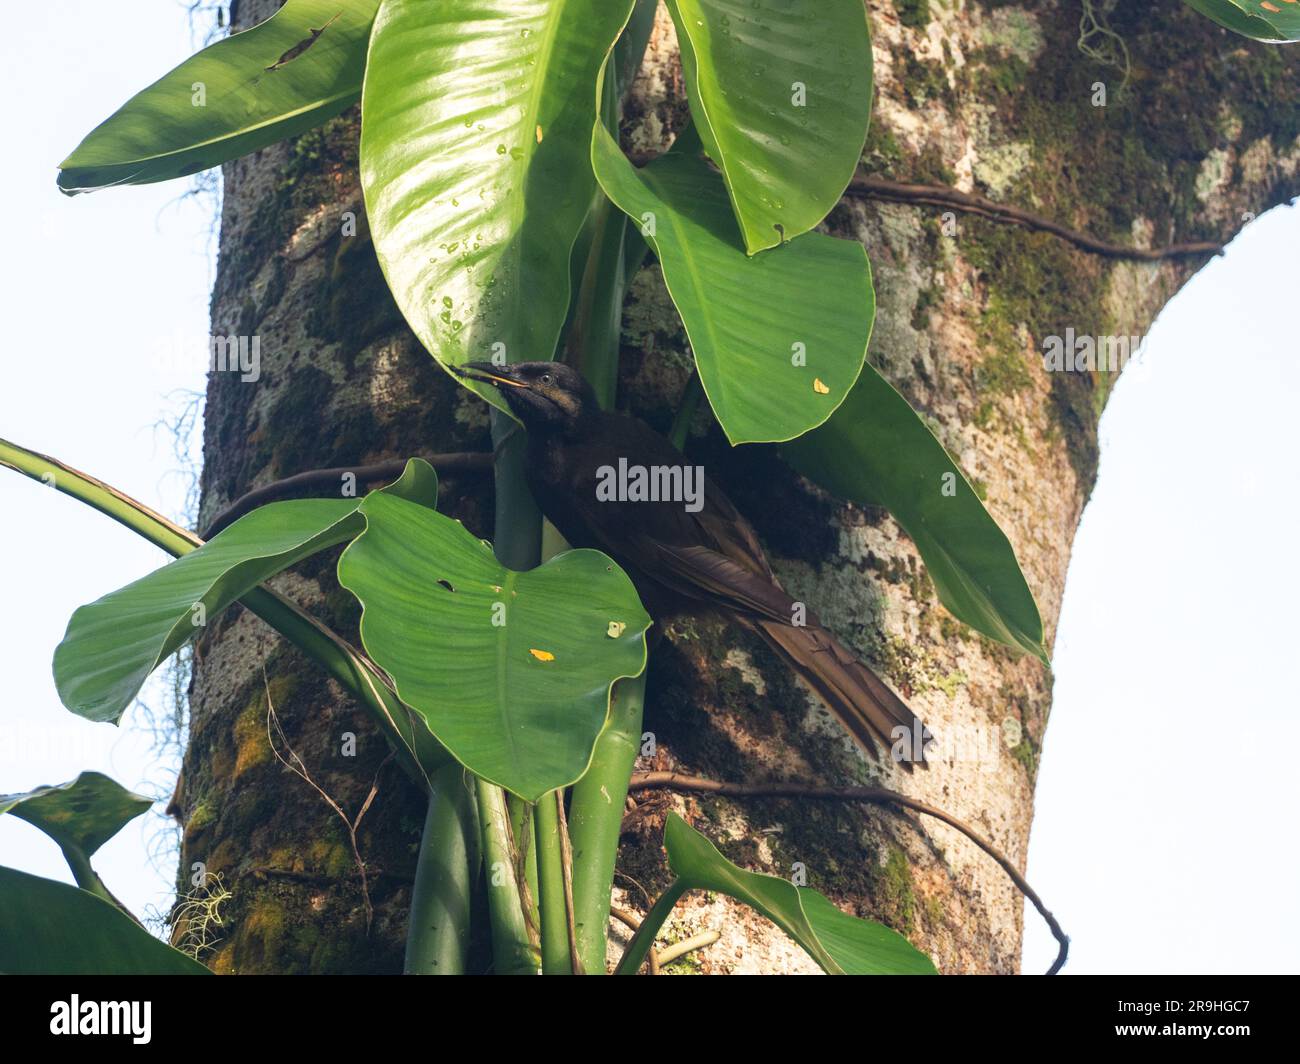 Mao, Gymnomyza samoensis, an endemic honeyeater bird found only in Samoa Stock Photo